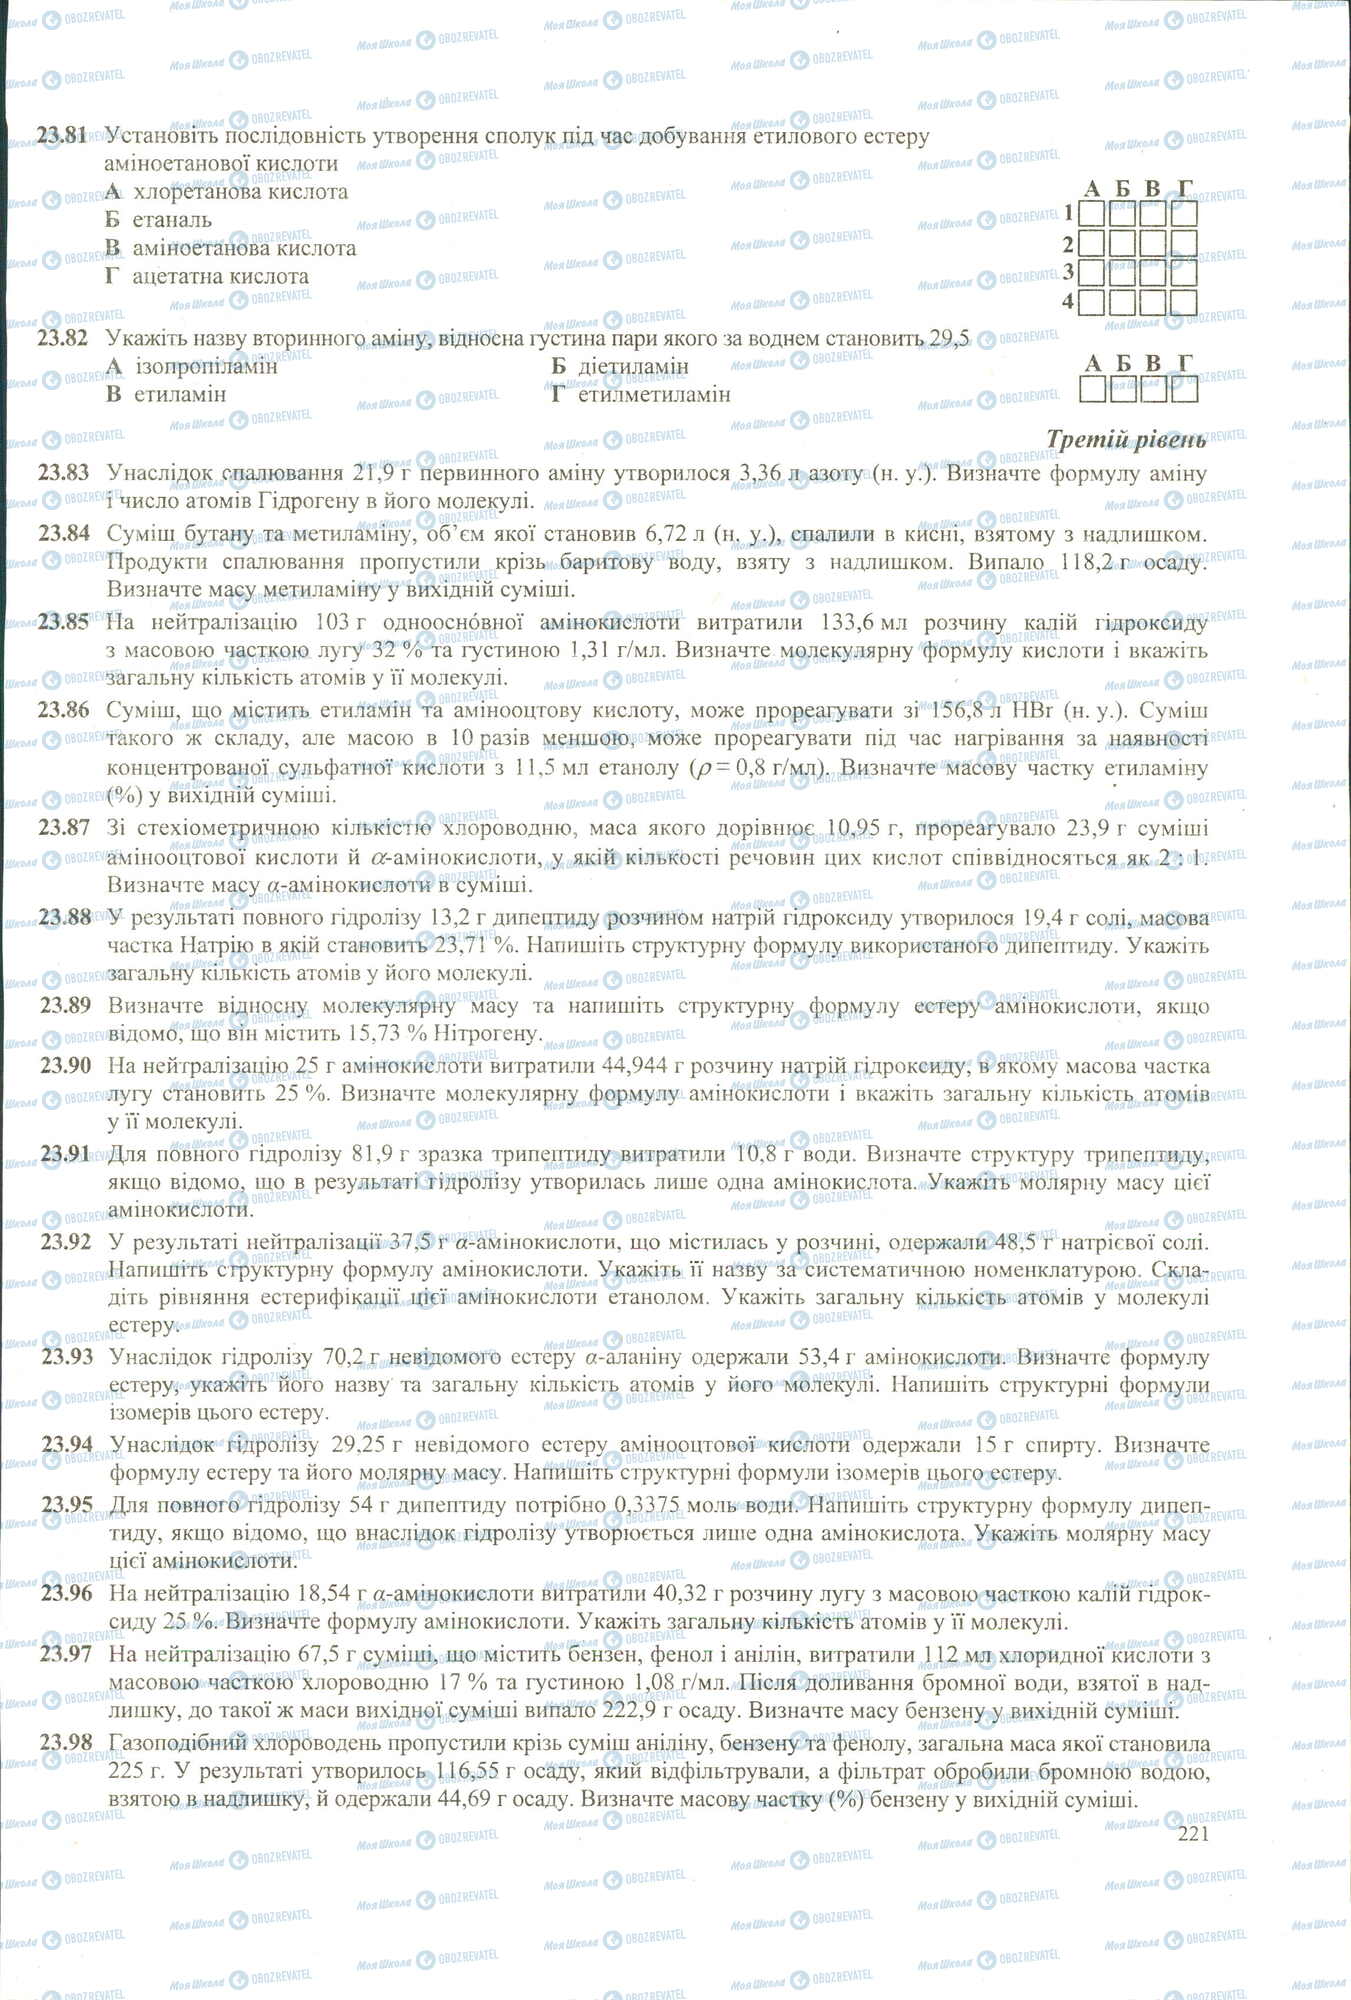 ЗНО Химия 11 класс страница 81-98